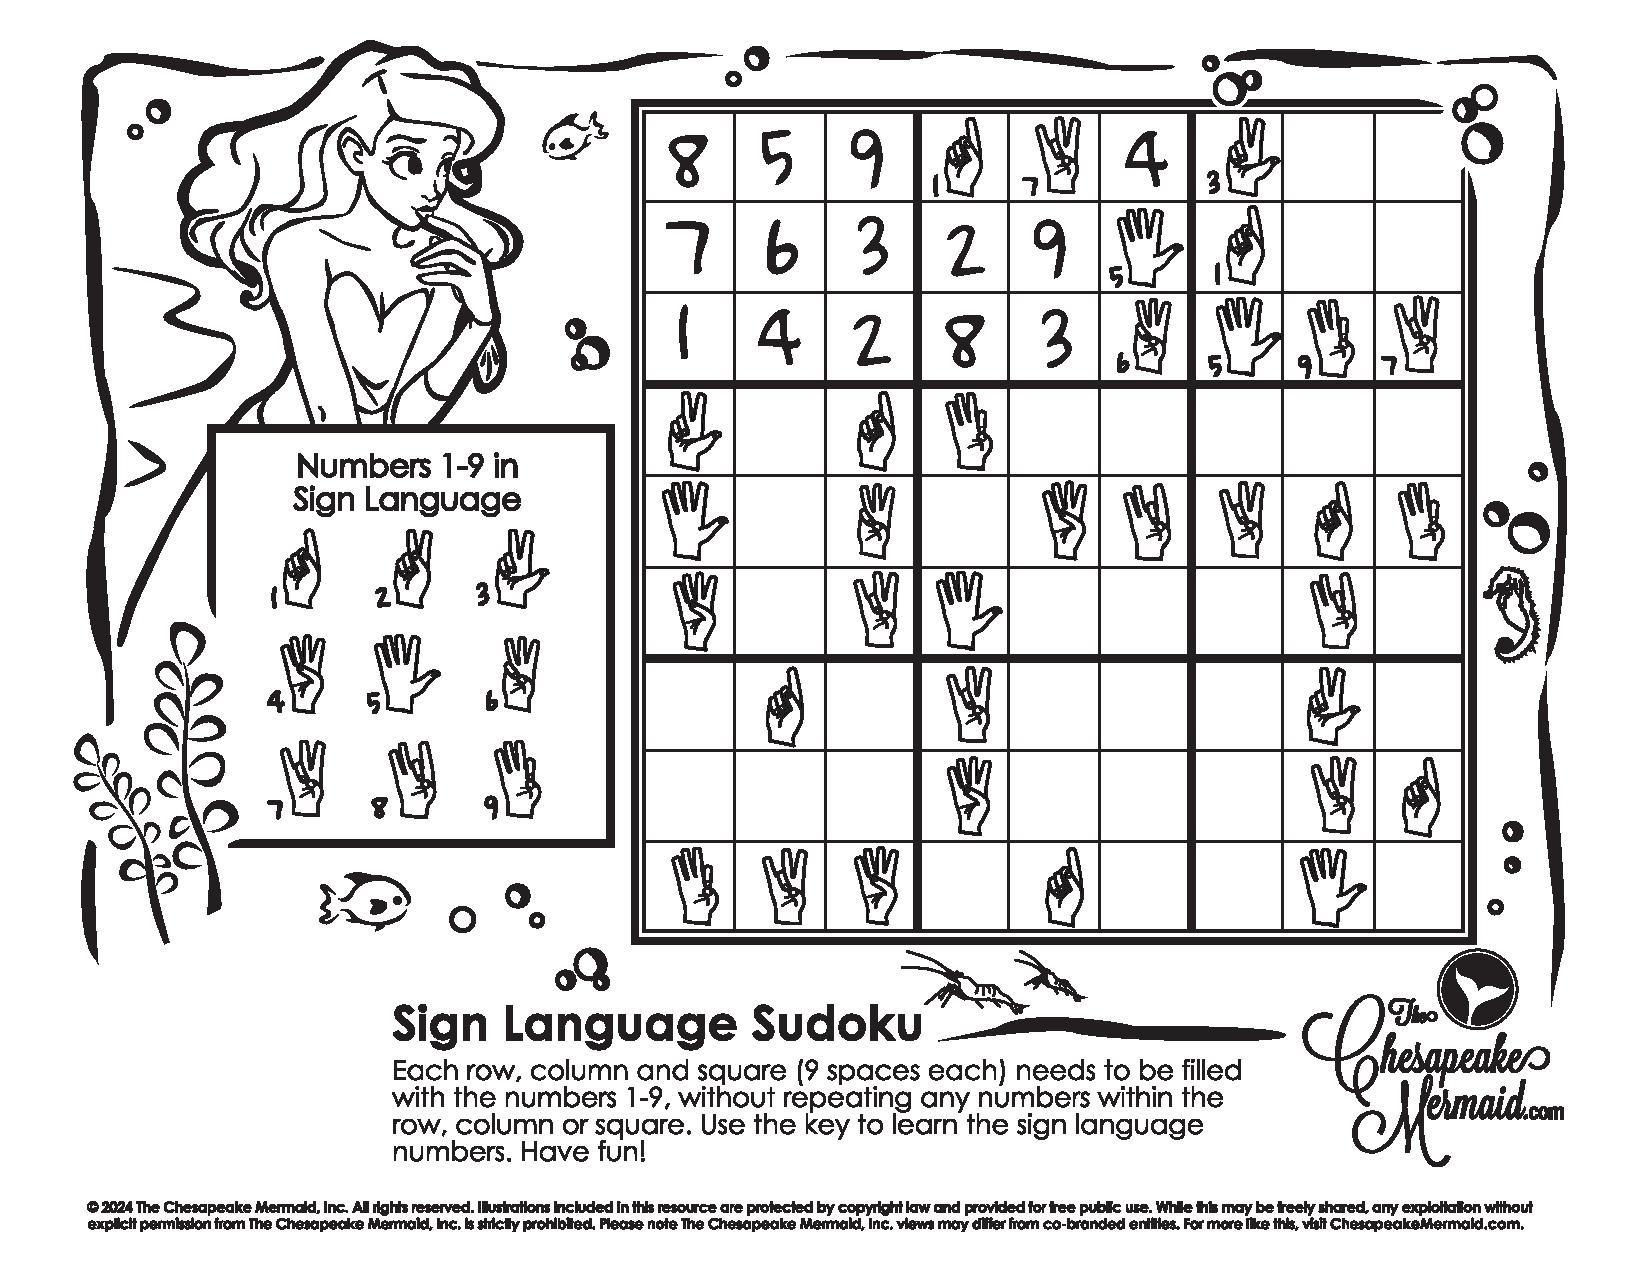 Sign Language Sudoku!